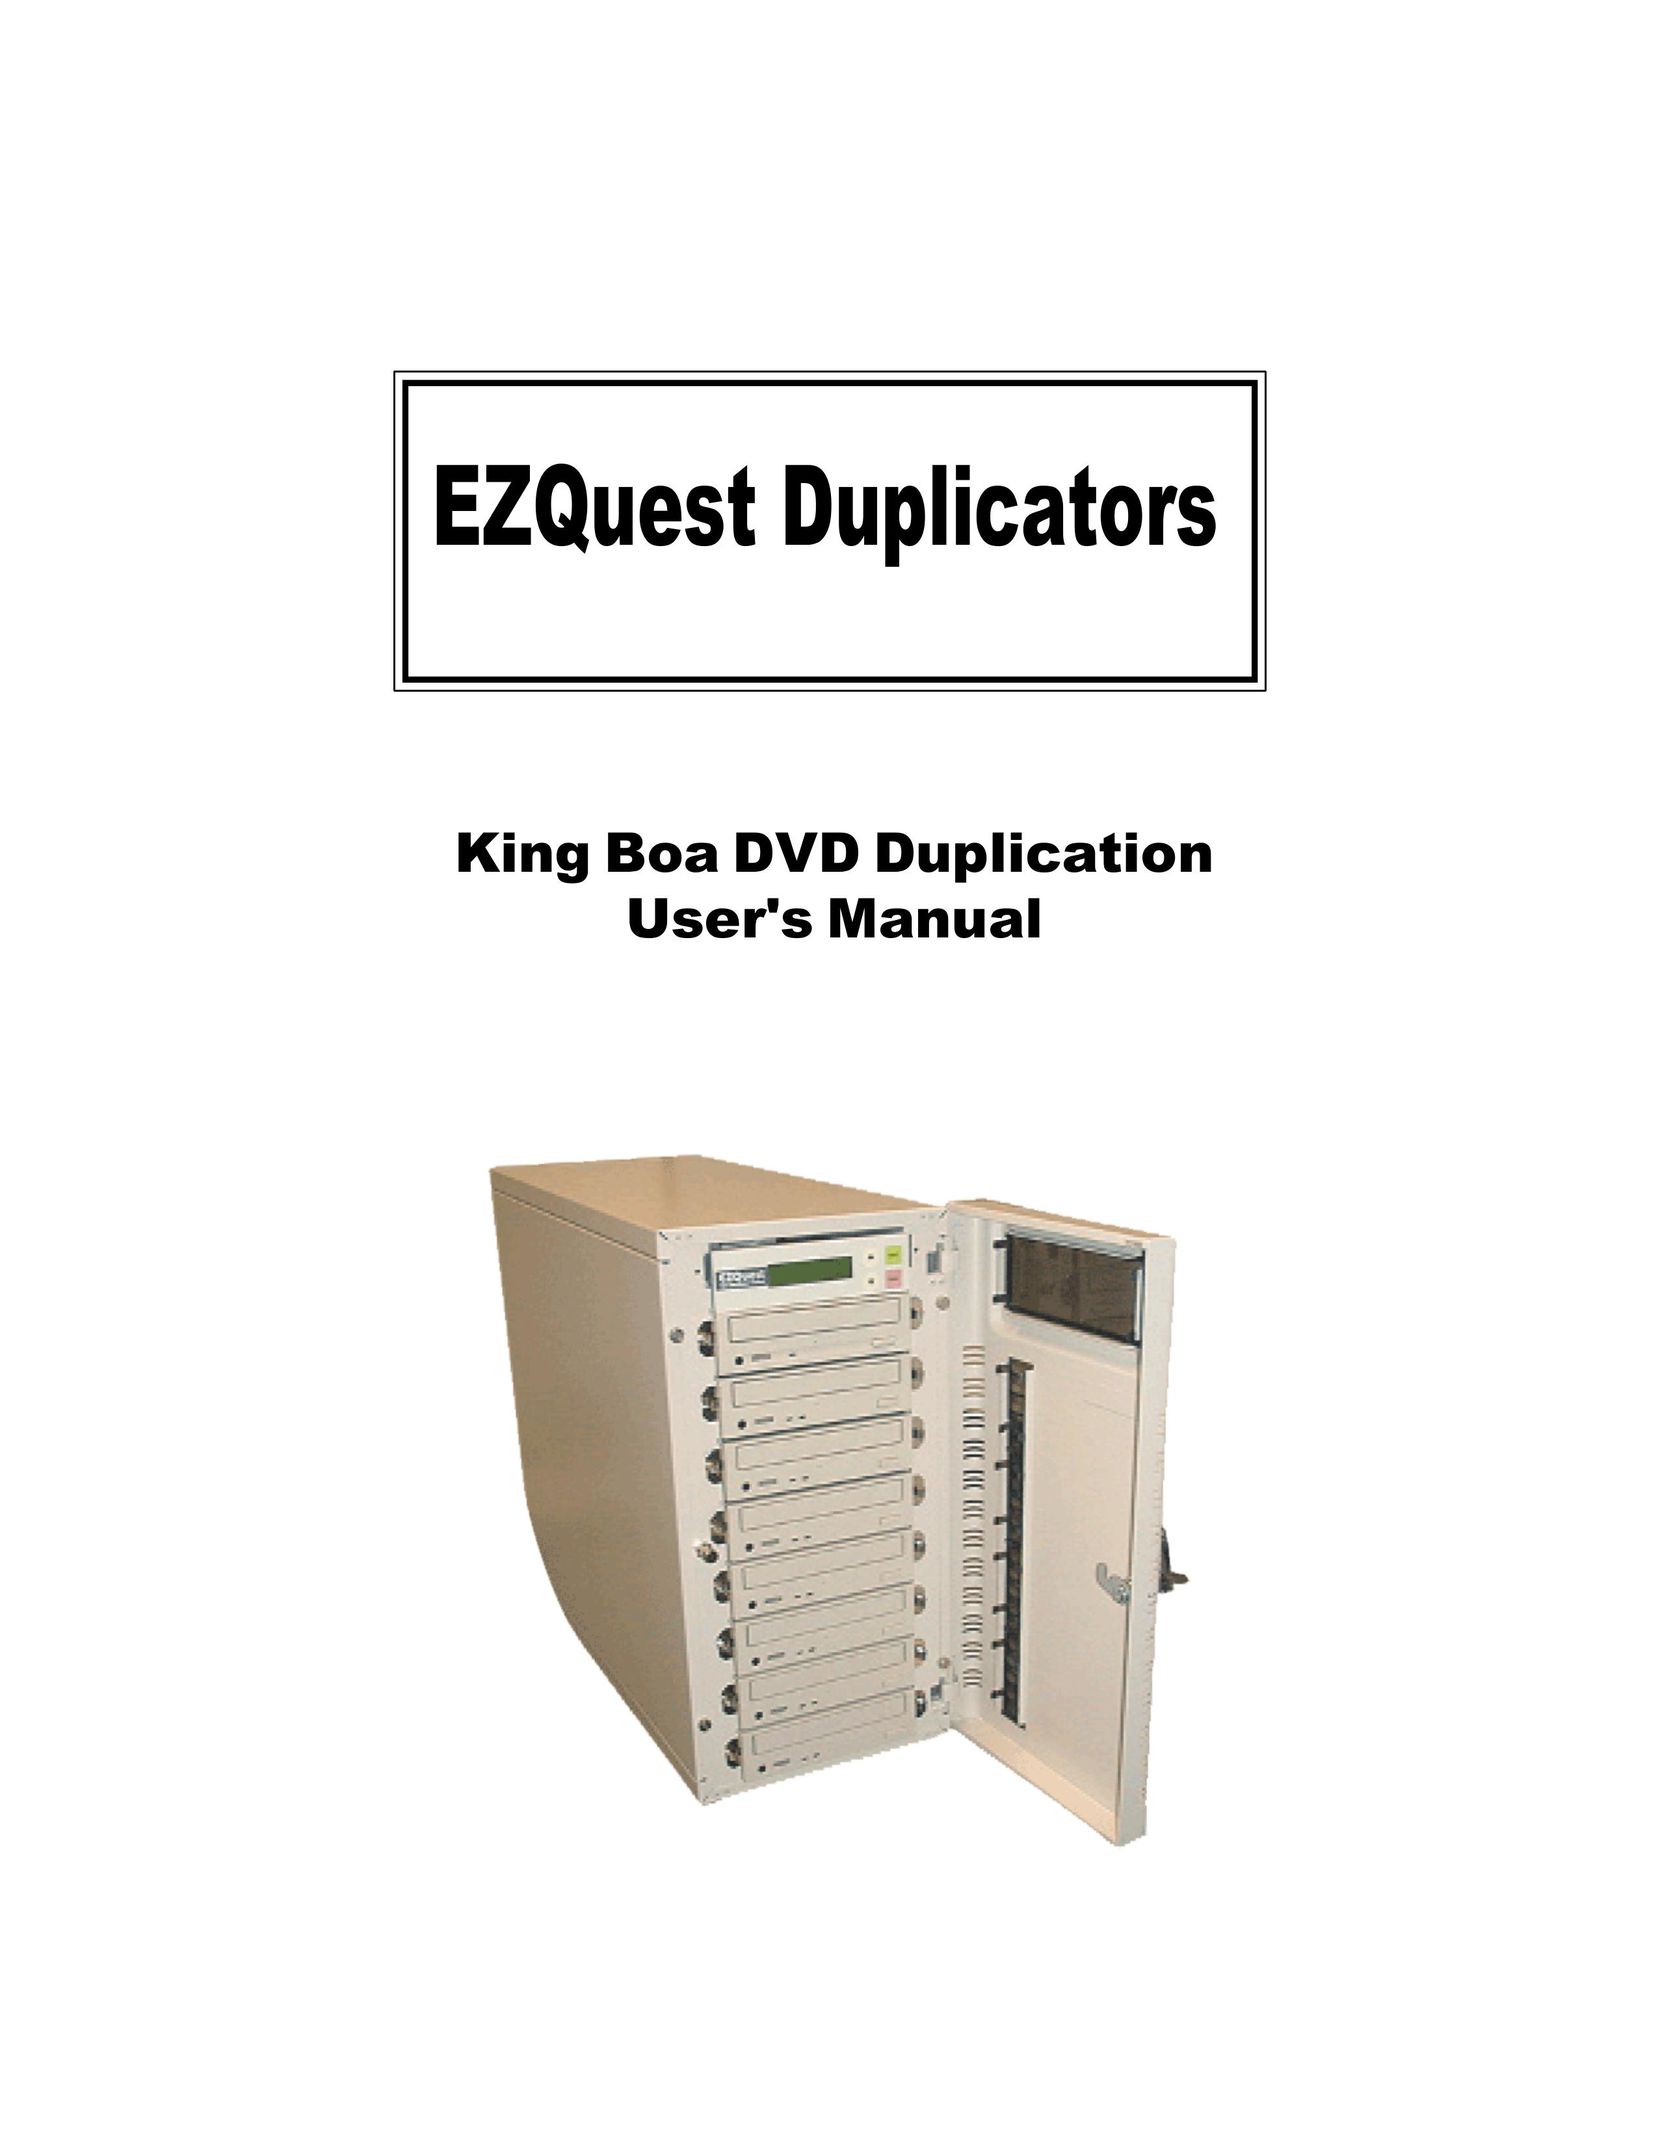 EZQuest DVD Duplication DVD Player User Manual